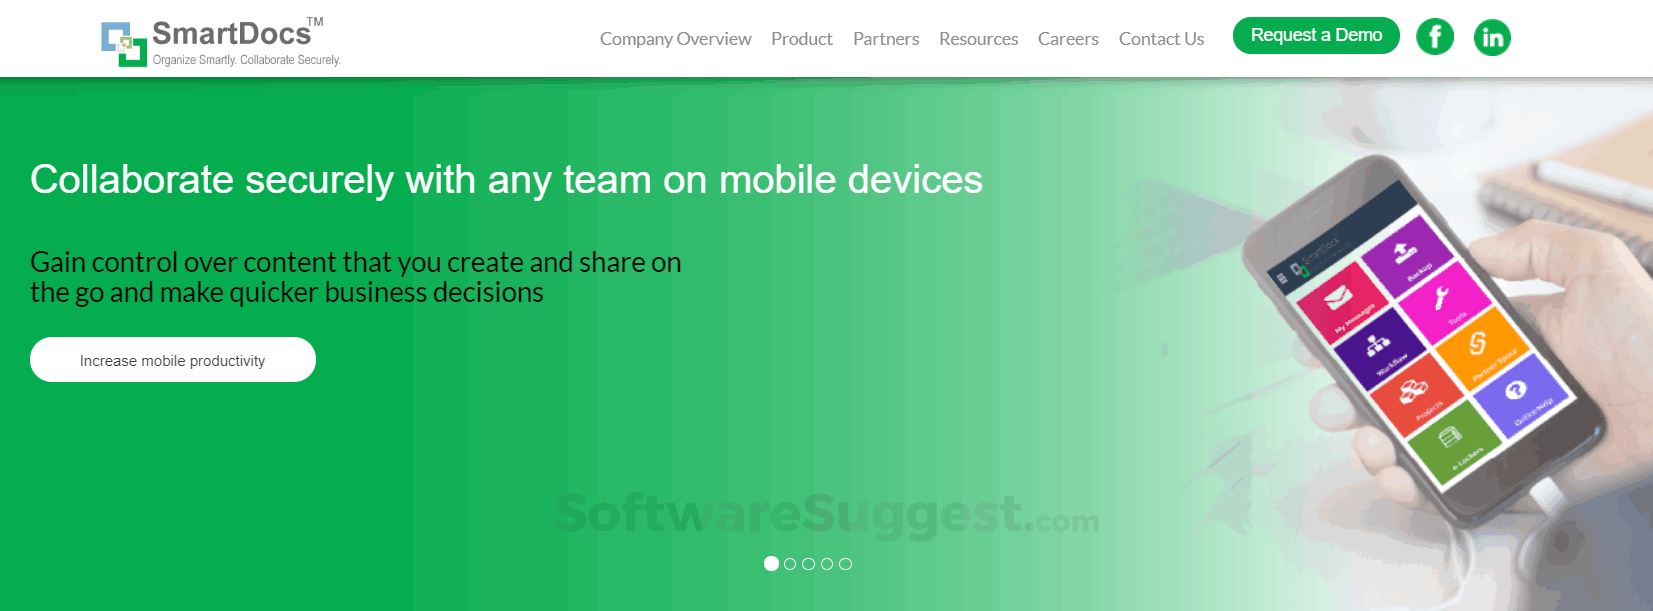 SmartDocs DMS Screenshot1